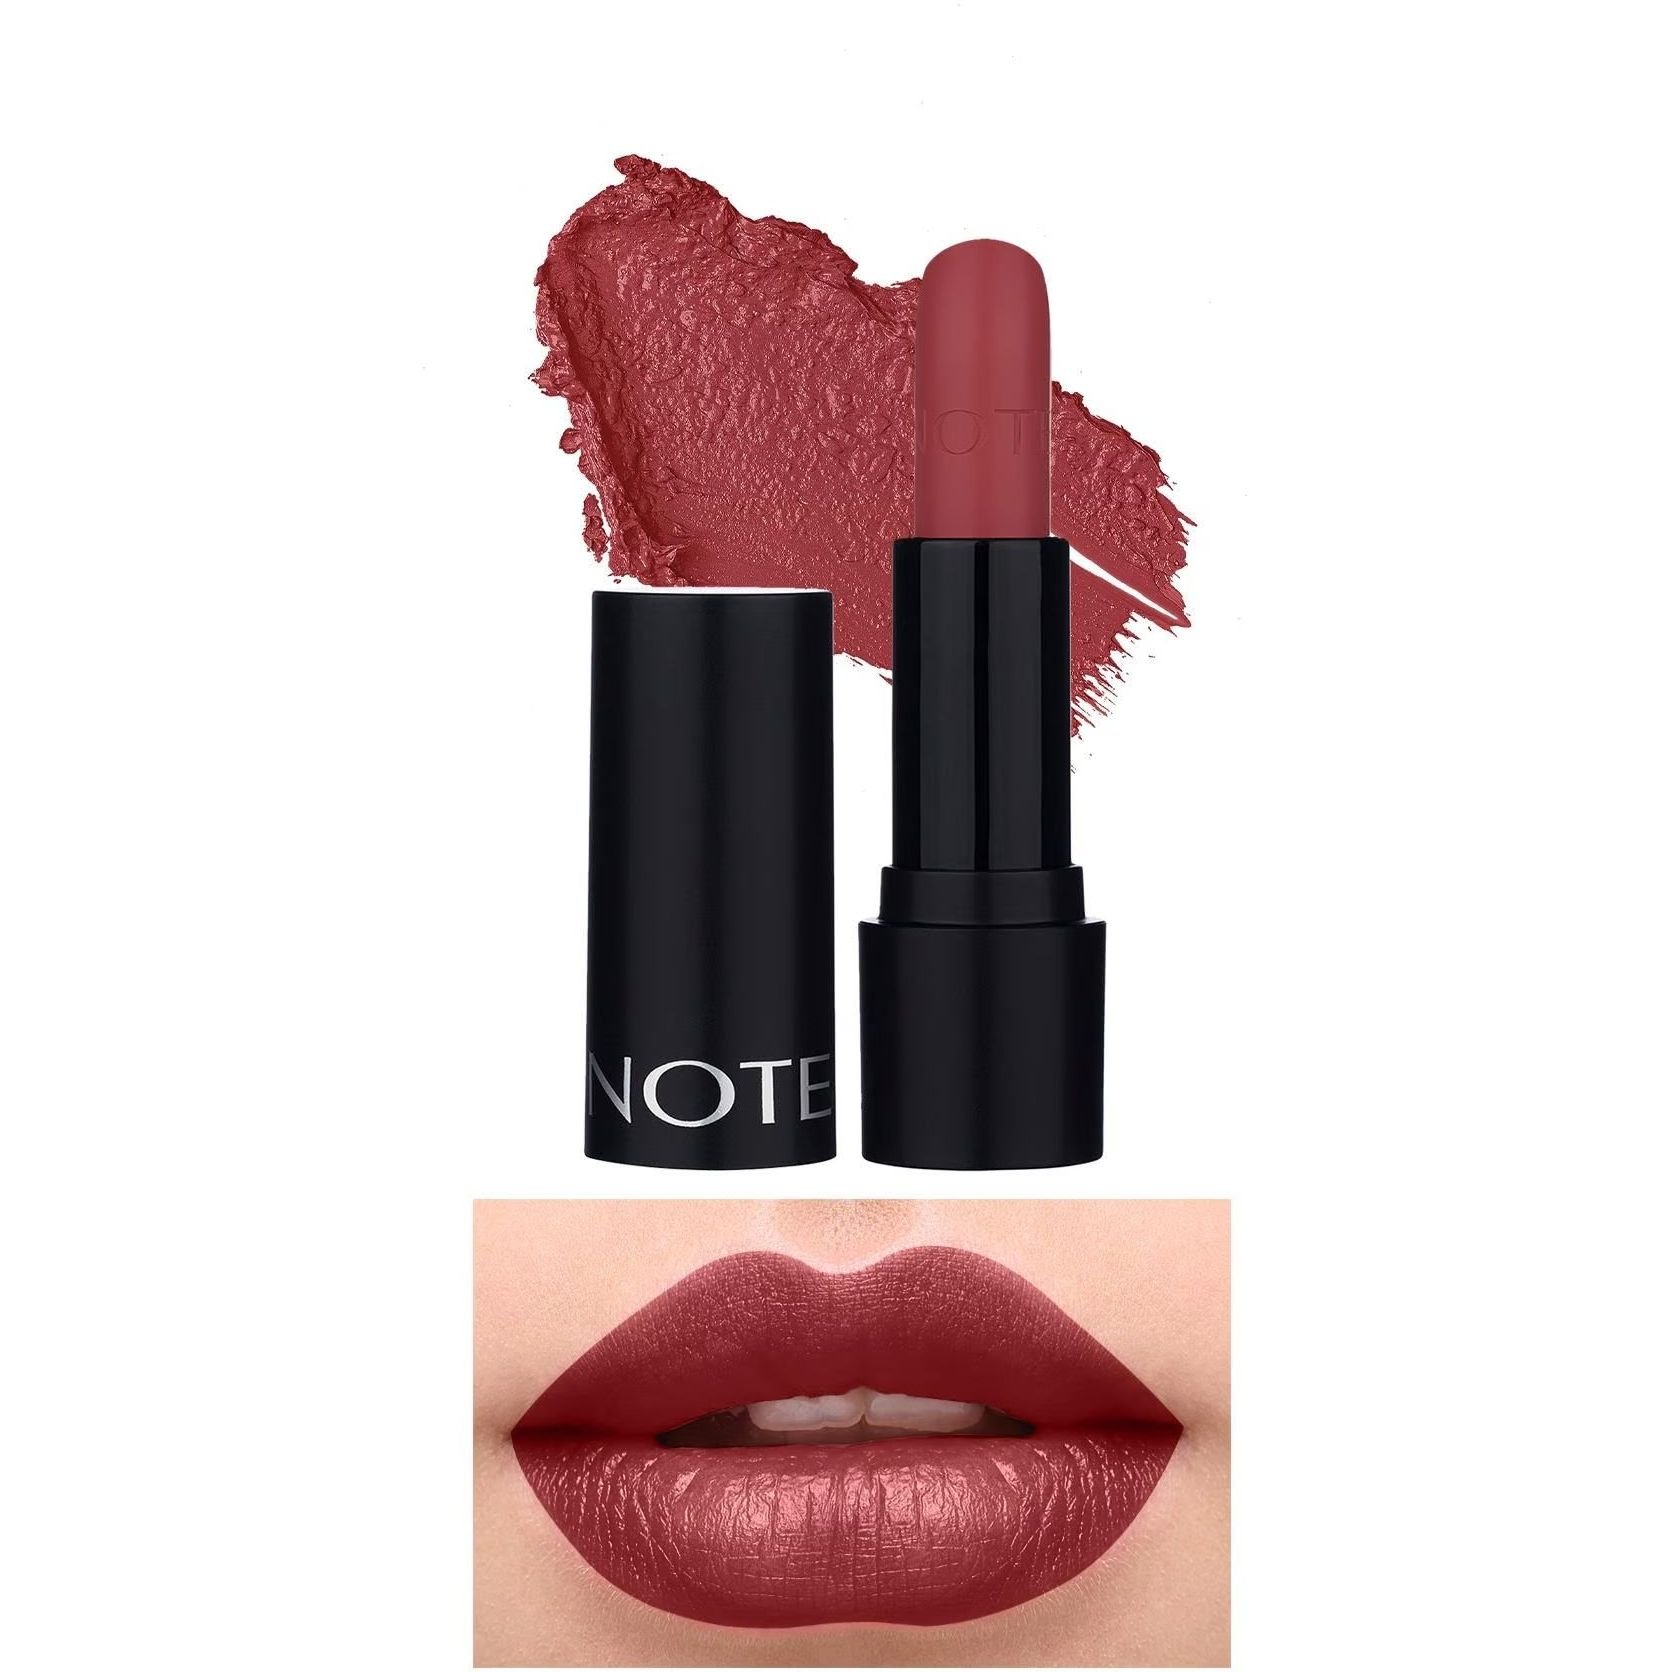 Помада для губ Note Cosmetique Deep Impact Lipstick відтінок 04 (Terracotta) 4.5 г - фото 4